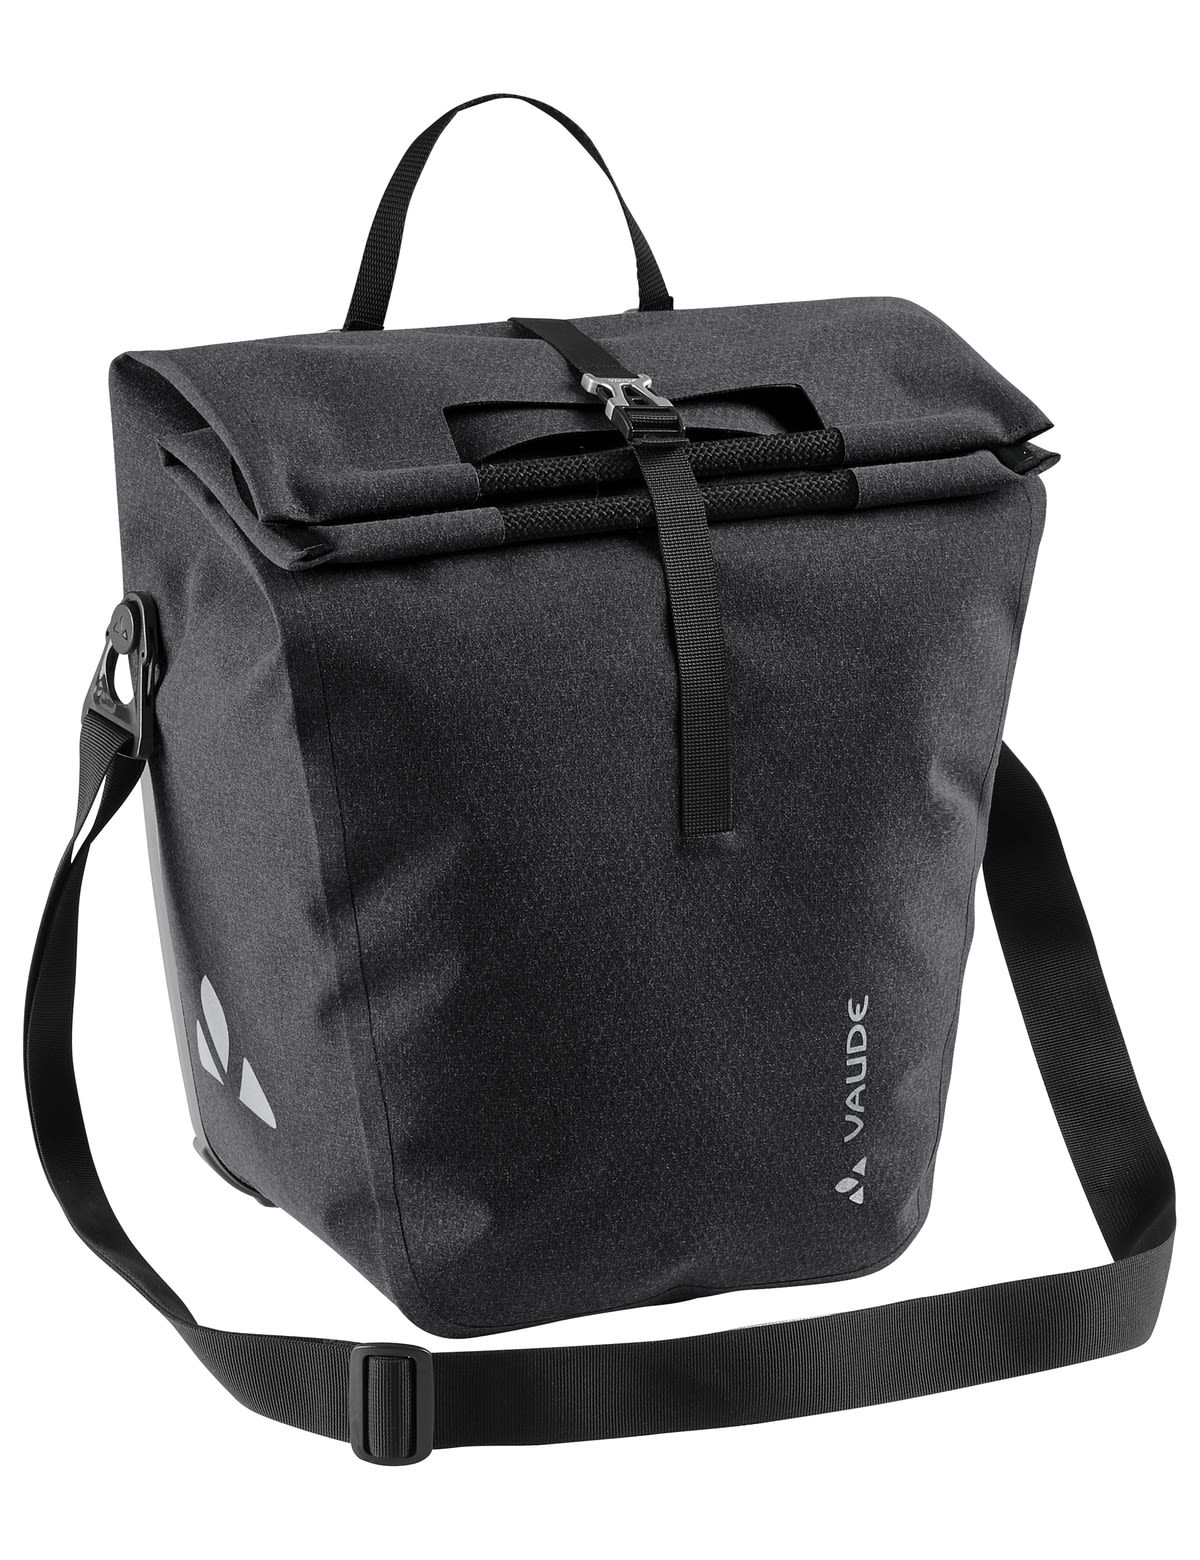 Vaude Recycle Back Single Schwarz- Taschen- Grsse 23+7l - Farbe Black